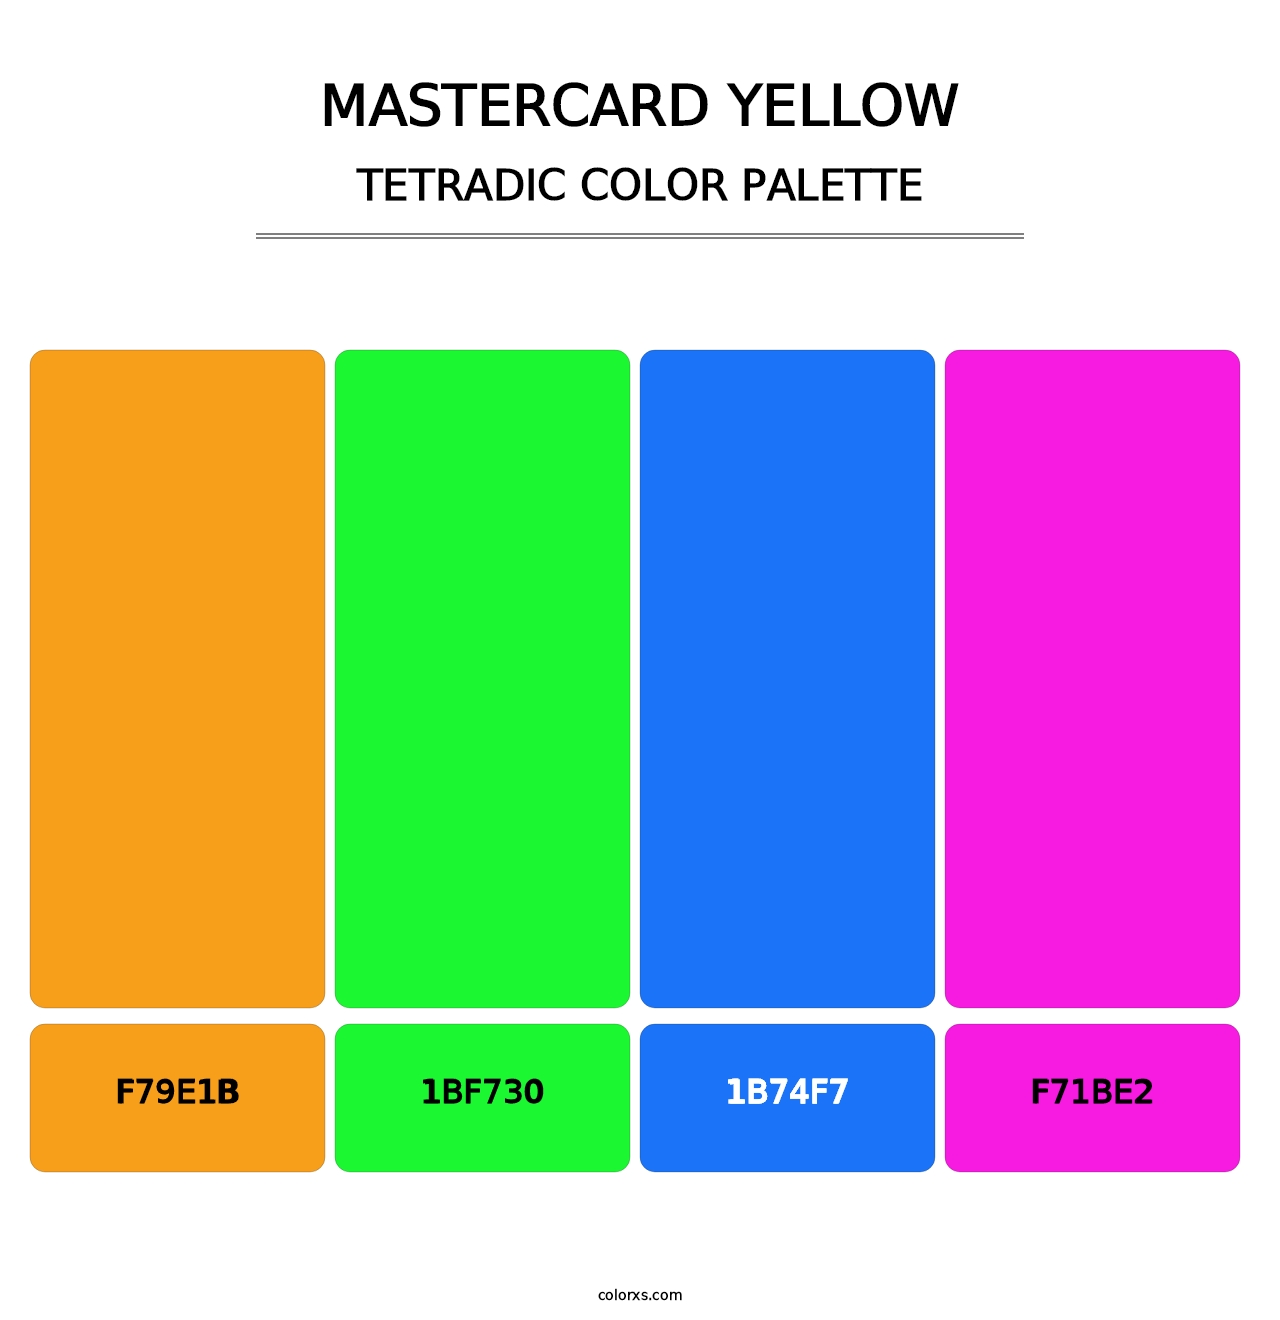 Mastercard Yellow - Tetradic Color Palette